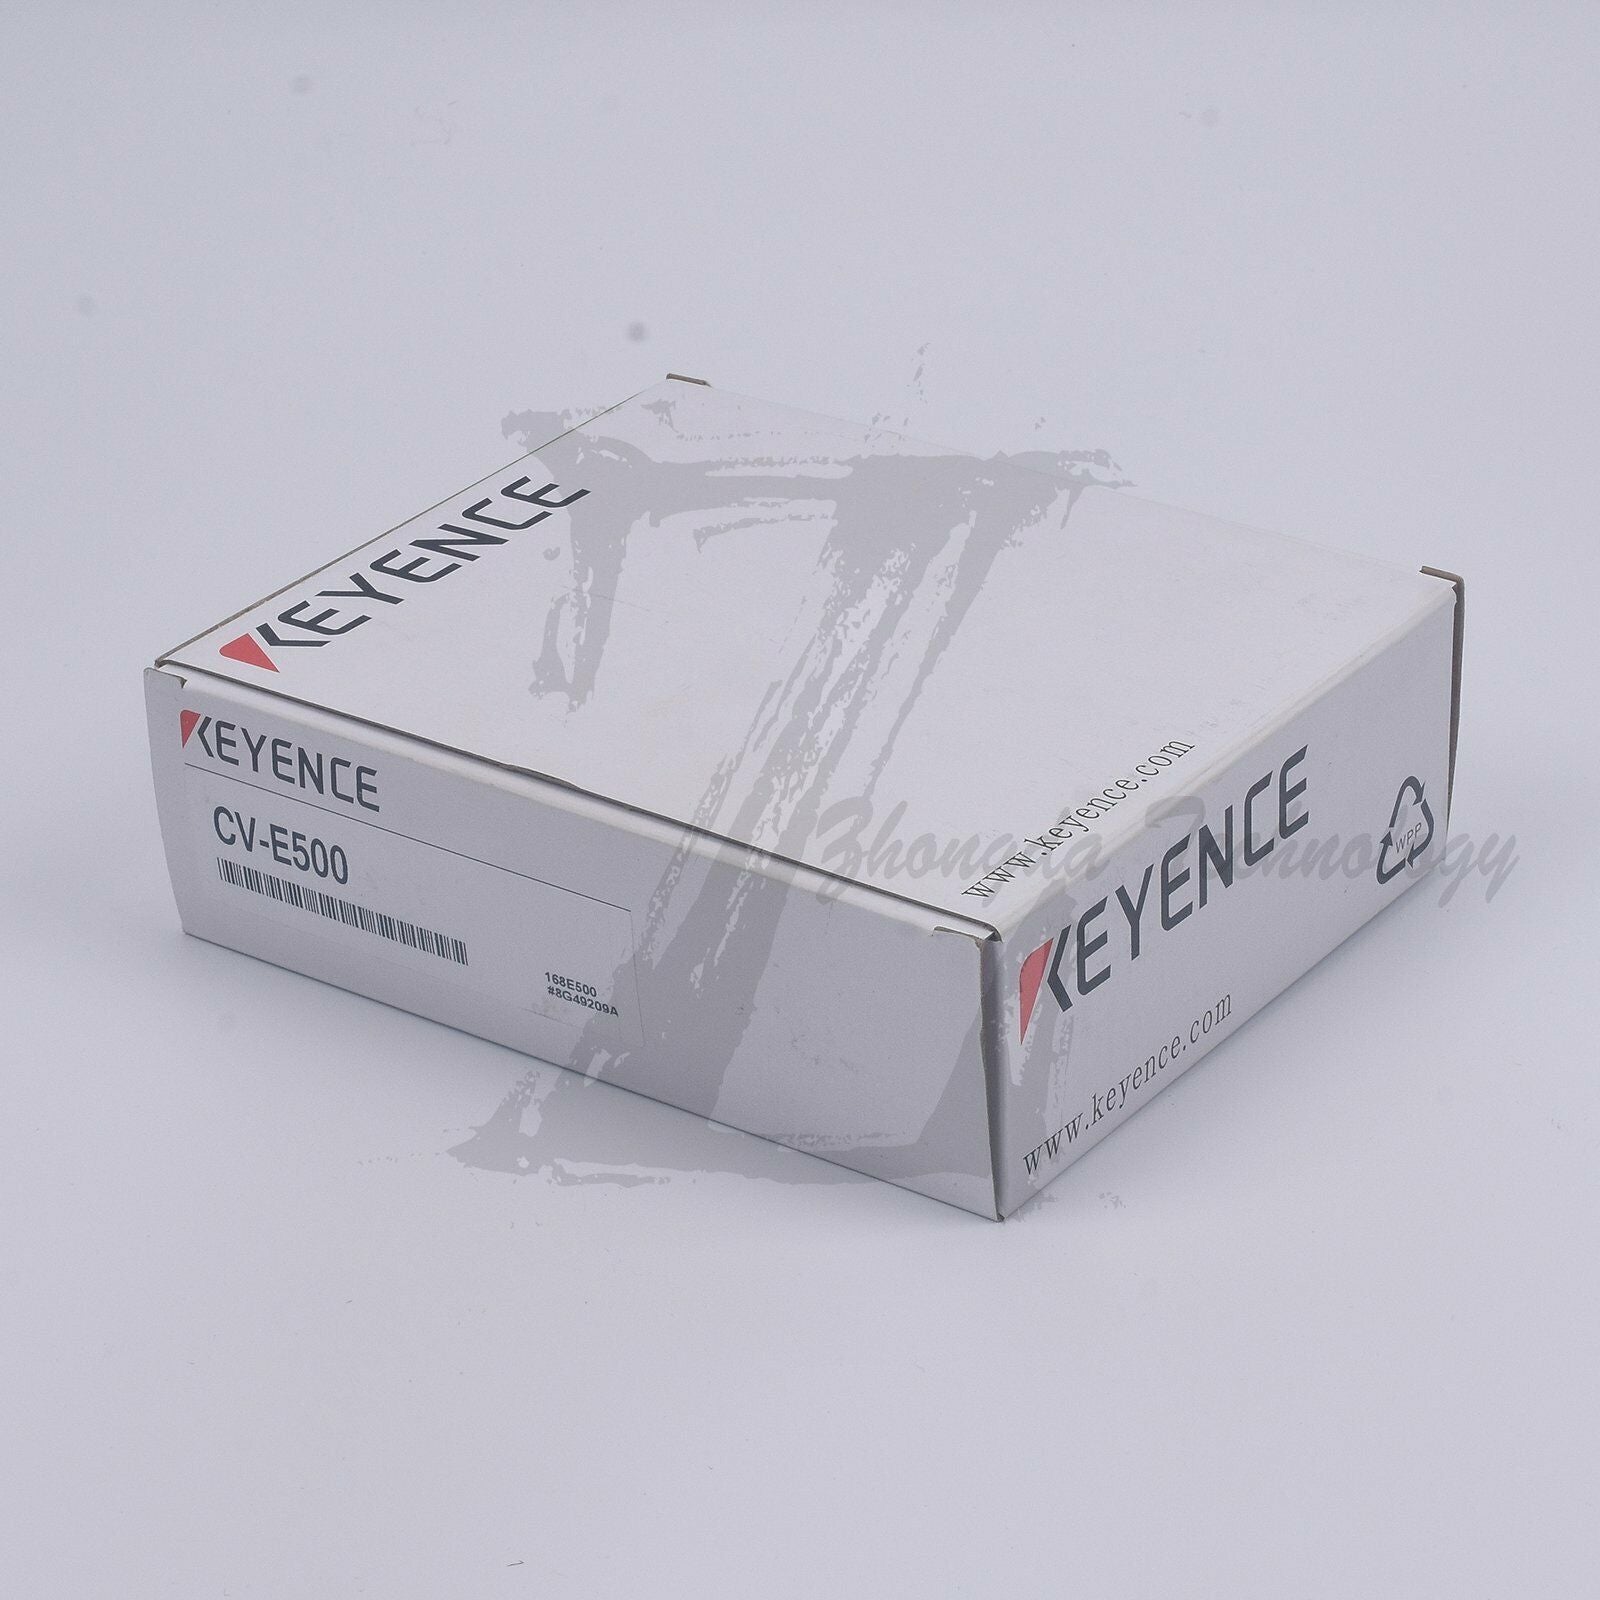 1PC Keyence Expansion Unit CV-E500 CVE500 New in box One year warranty KOEED 500+, import_2020_10_10_031751, Keyence, NEW, Other